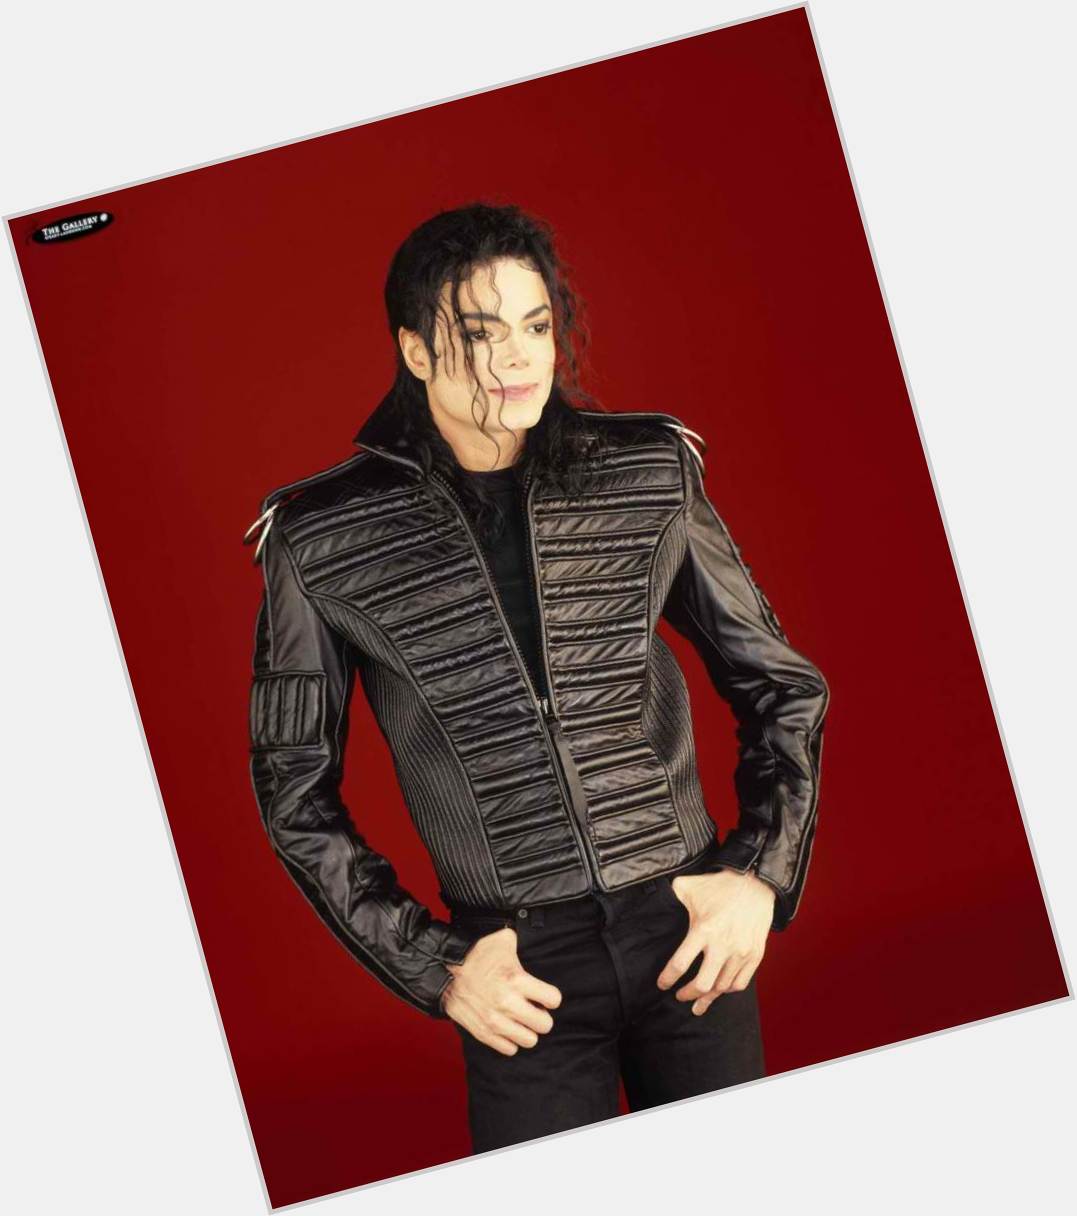 Happy Birthday, Michael Jackson!!! 
I love you so mush! 